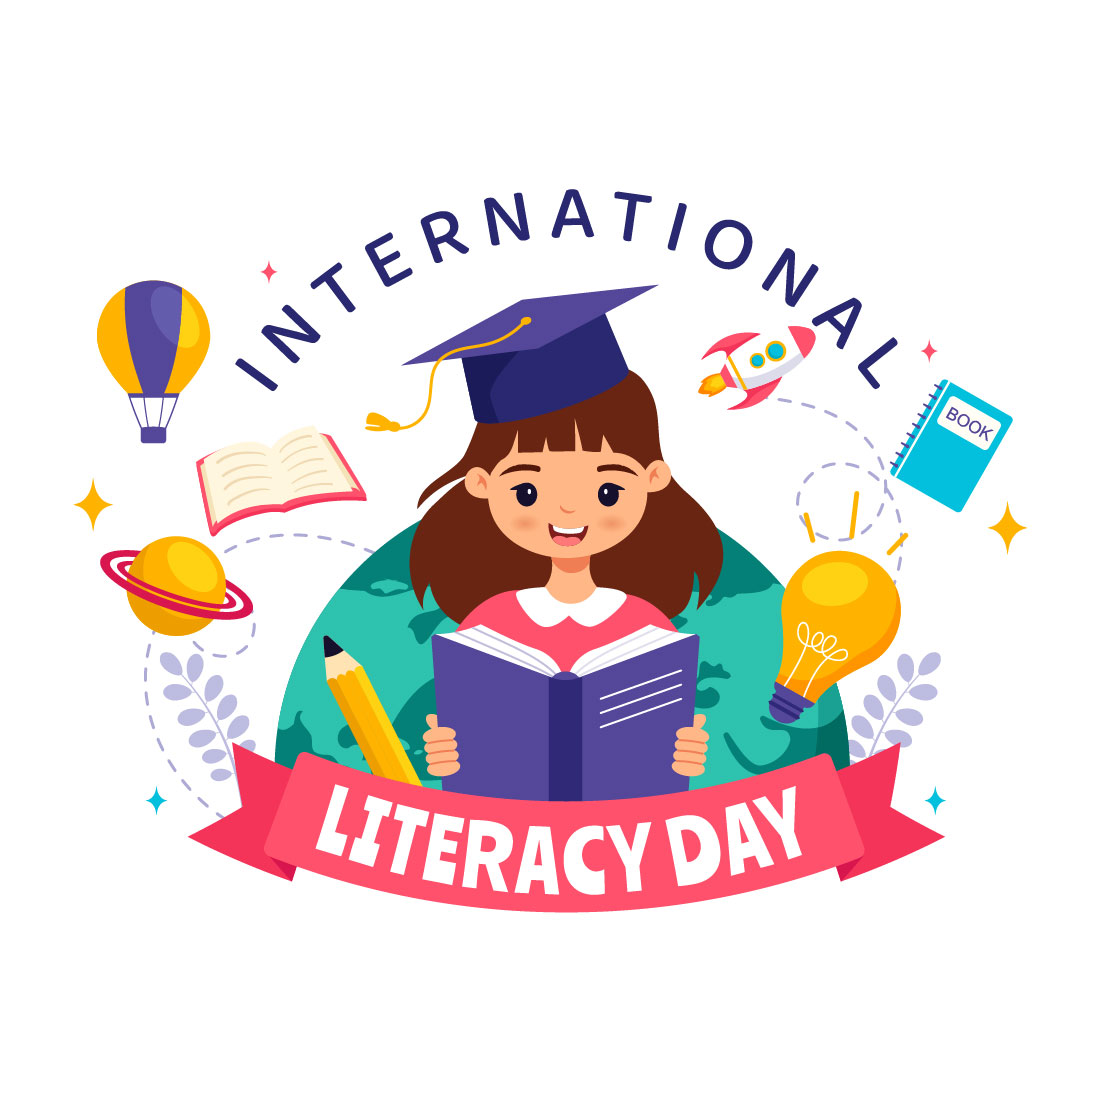 12 International Literacy Day Illustration cover image.